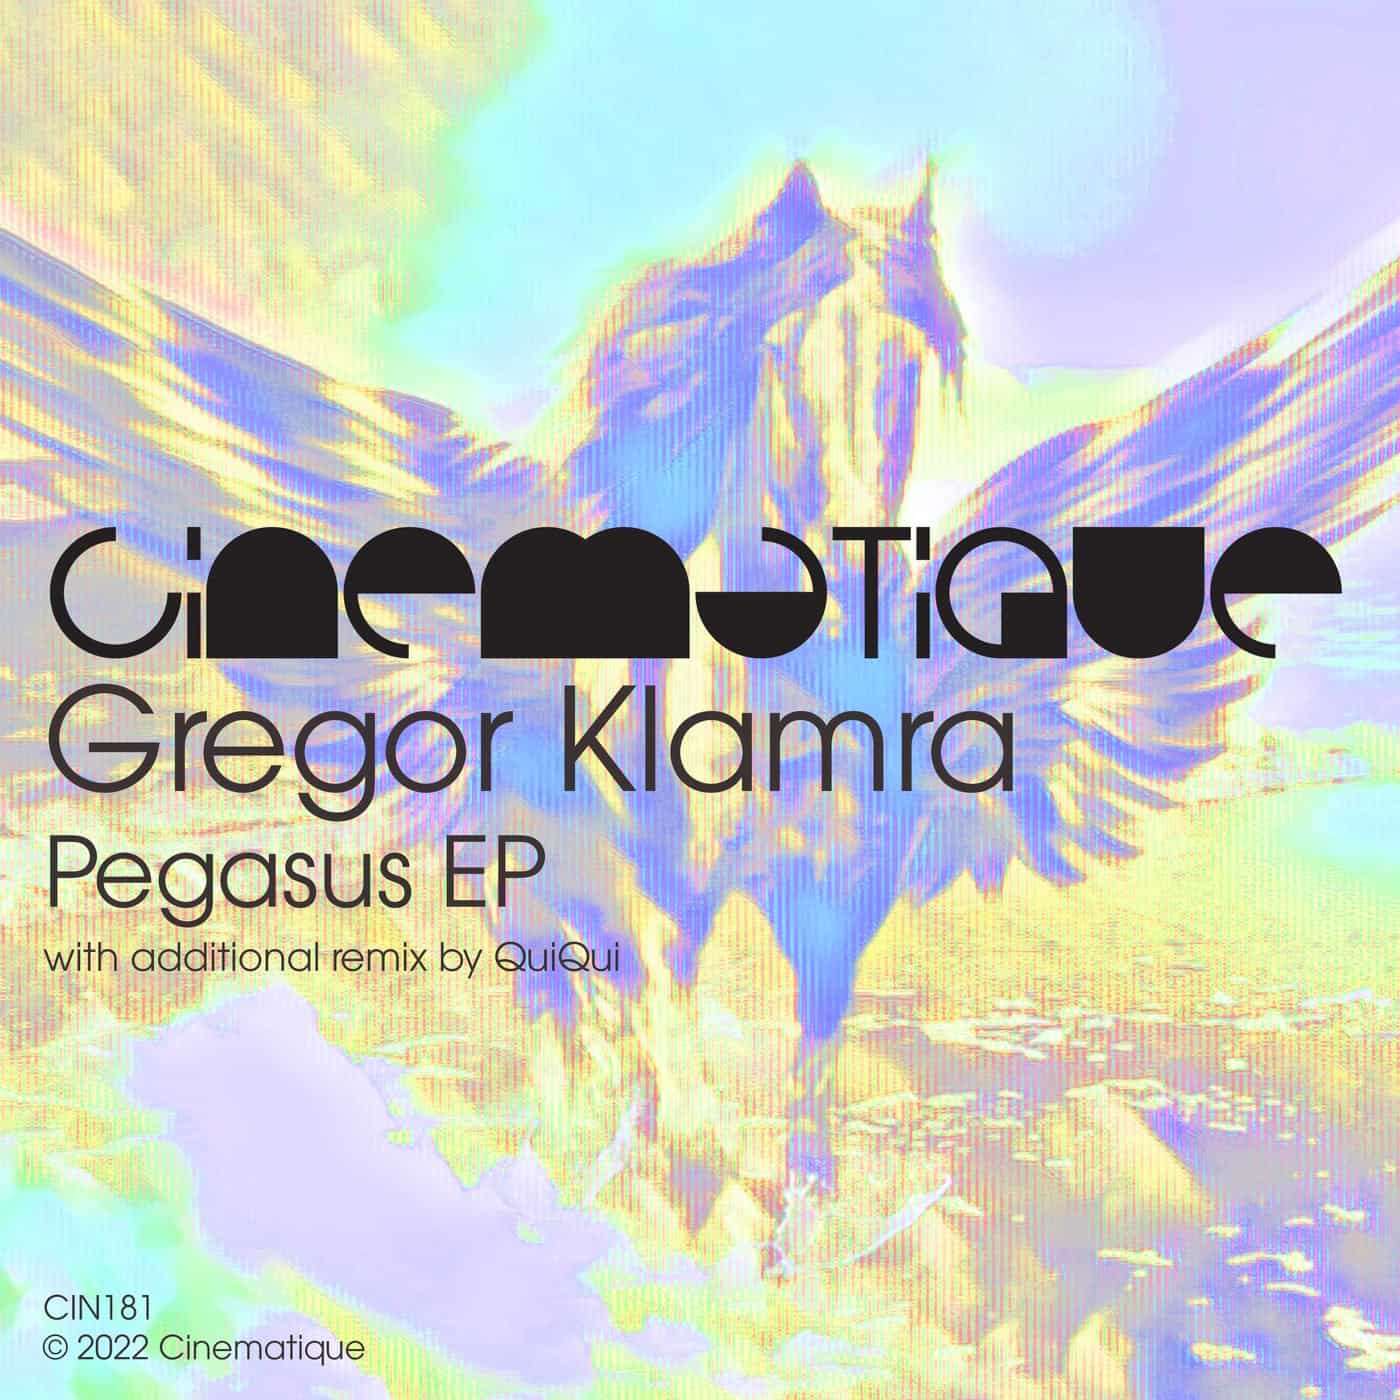 Download Gregor Klamra - Pegasus EP on Electrobuzz